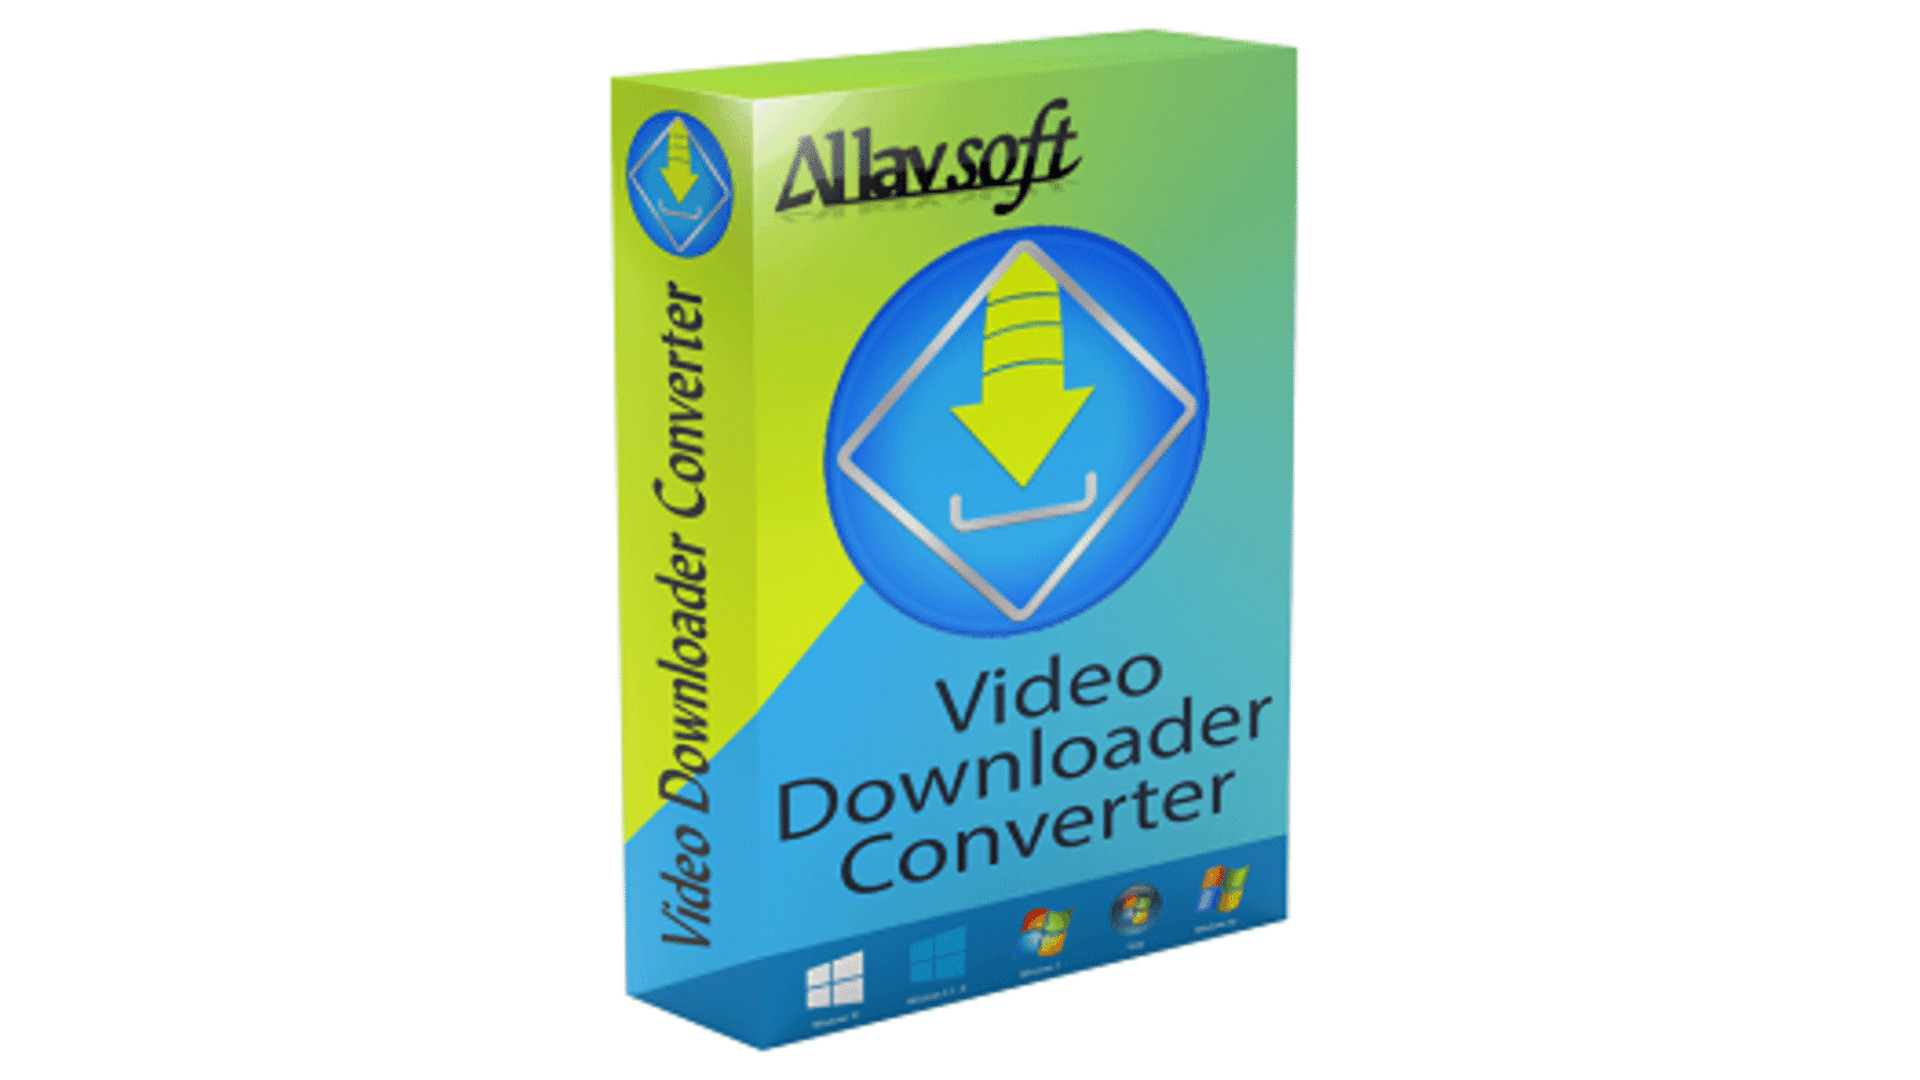 Allavsoft Video Downloader and Converter for Windows CD Key 2.75 usd